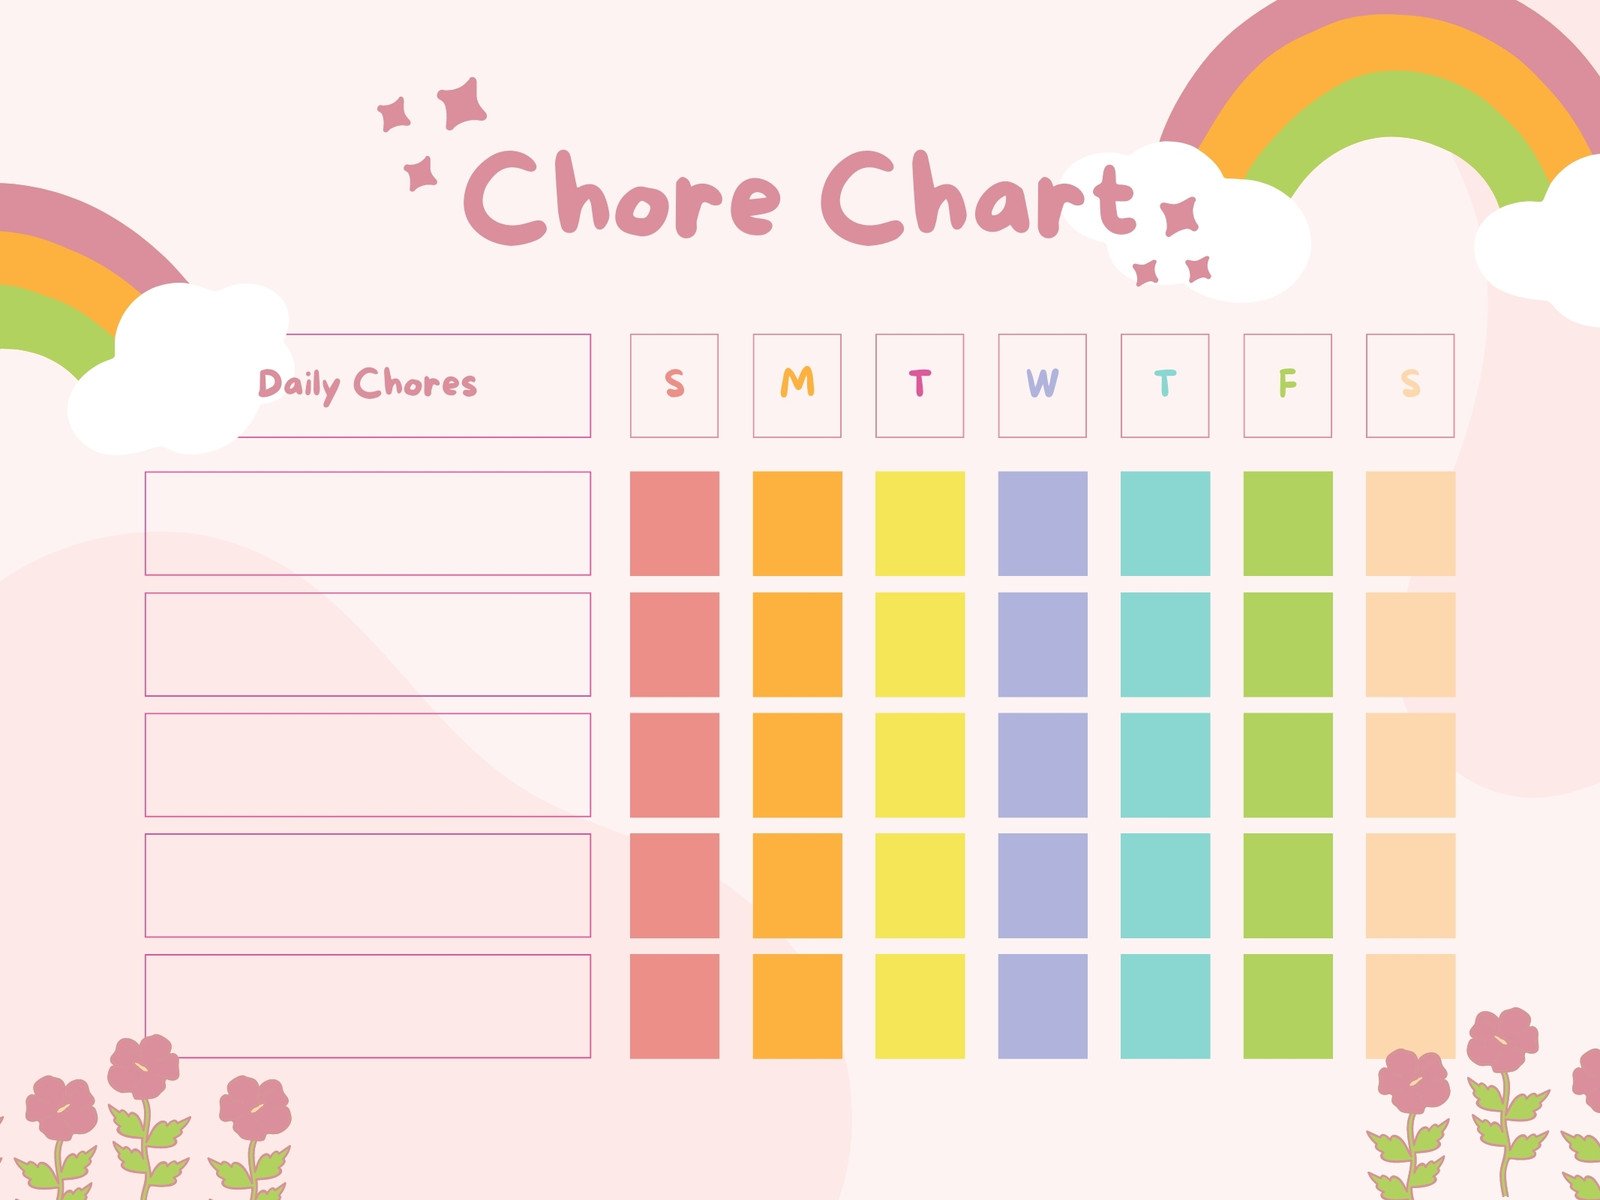 FREE chore chart template